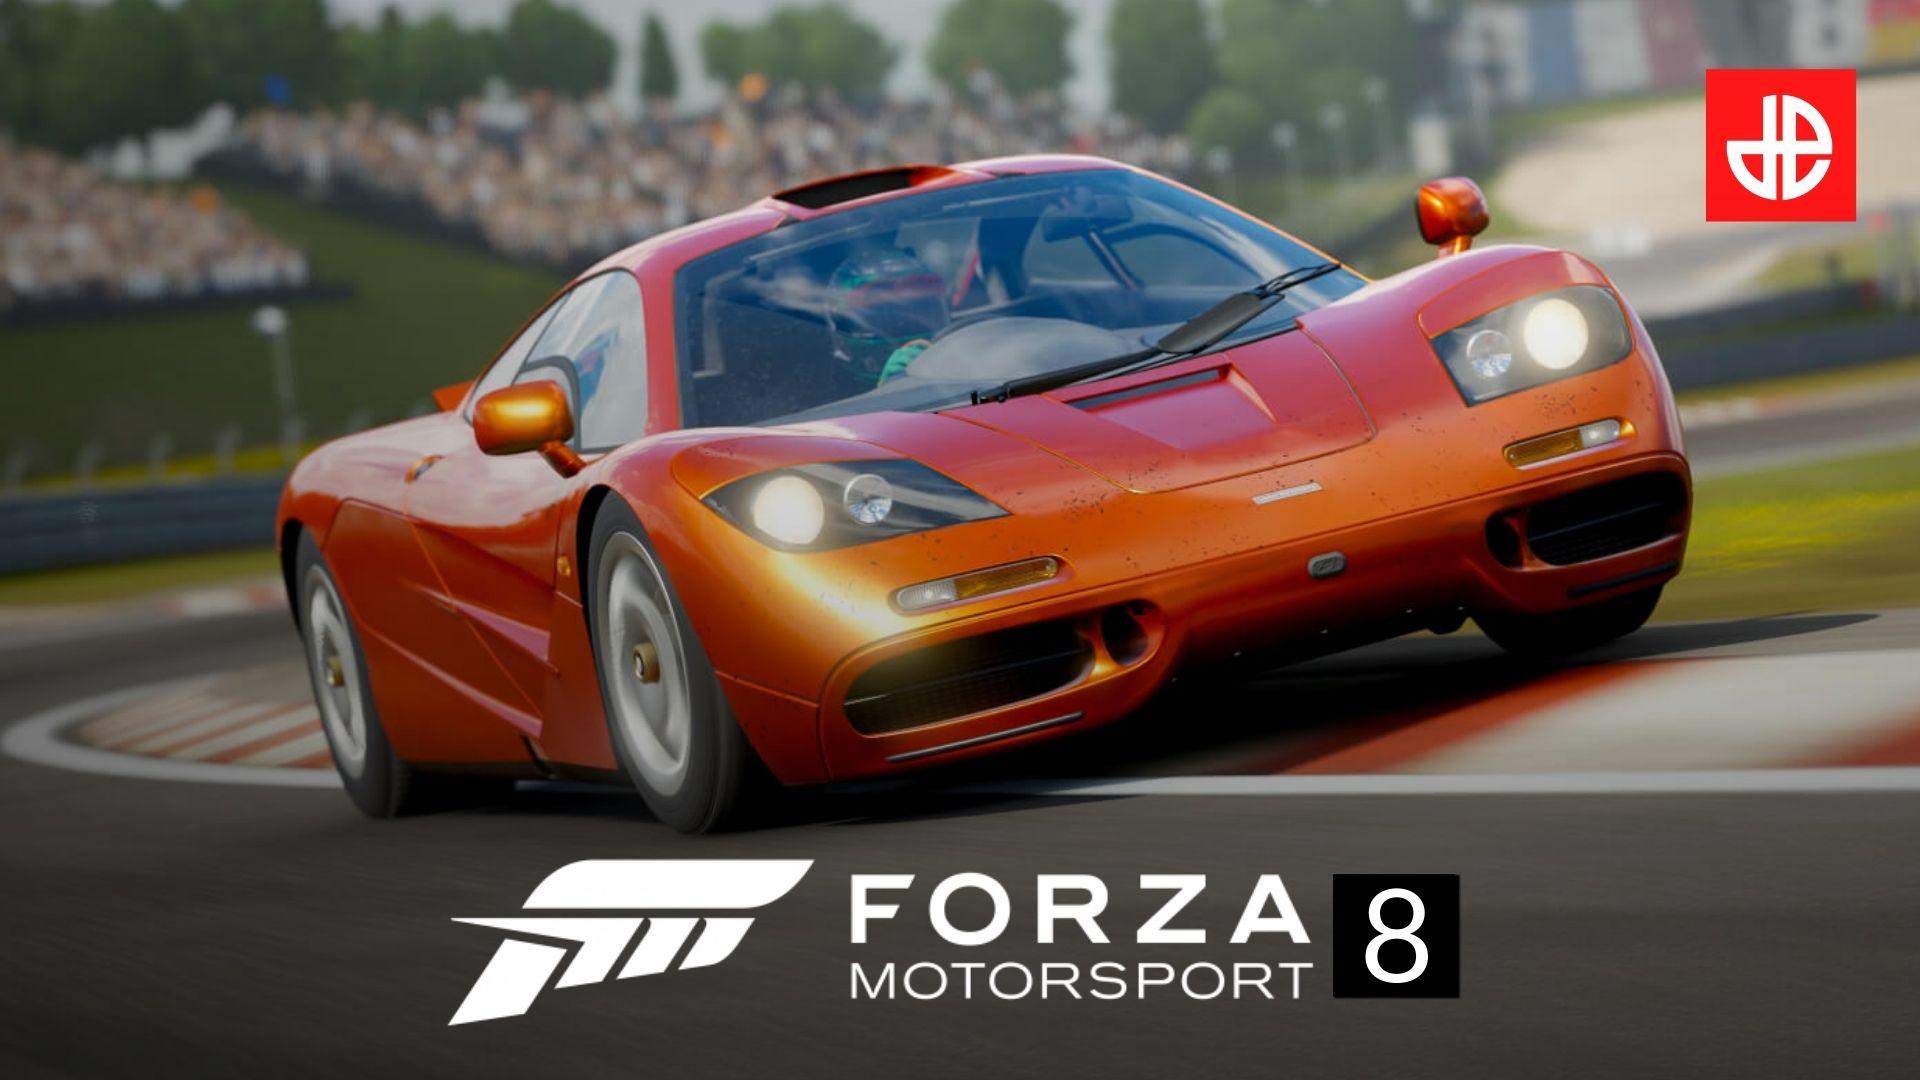 Forza Motorsport 8 car on racetrack